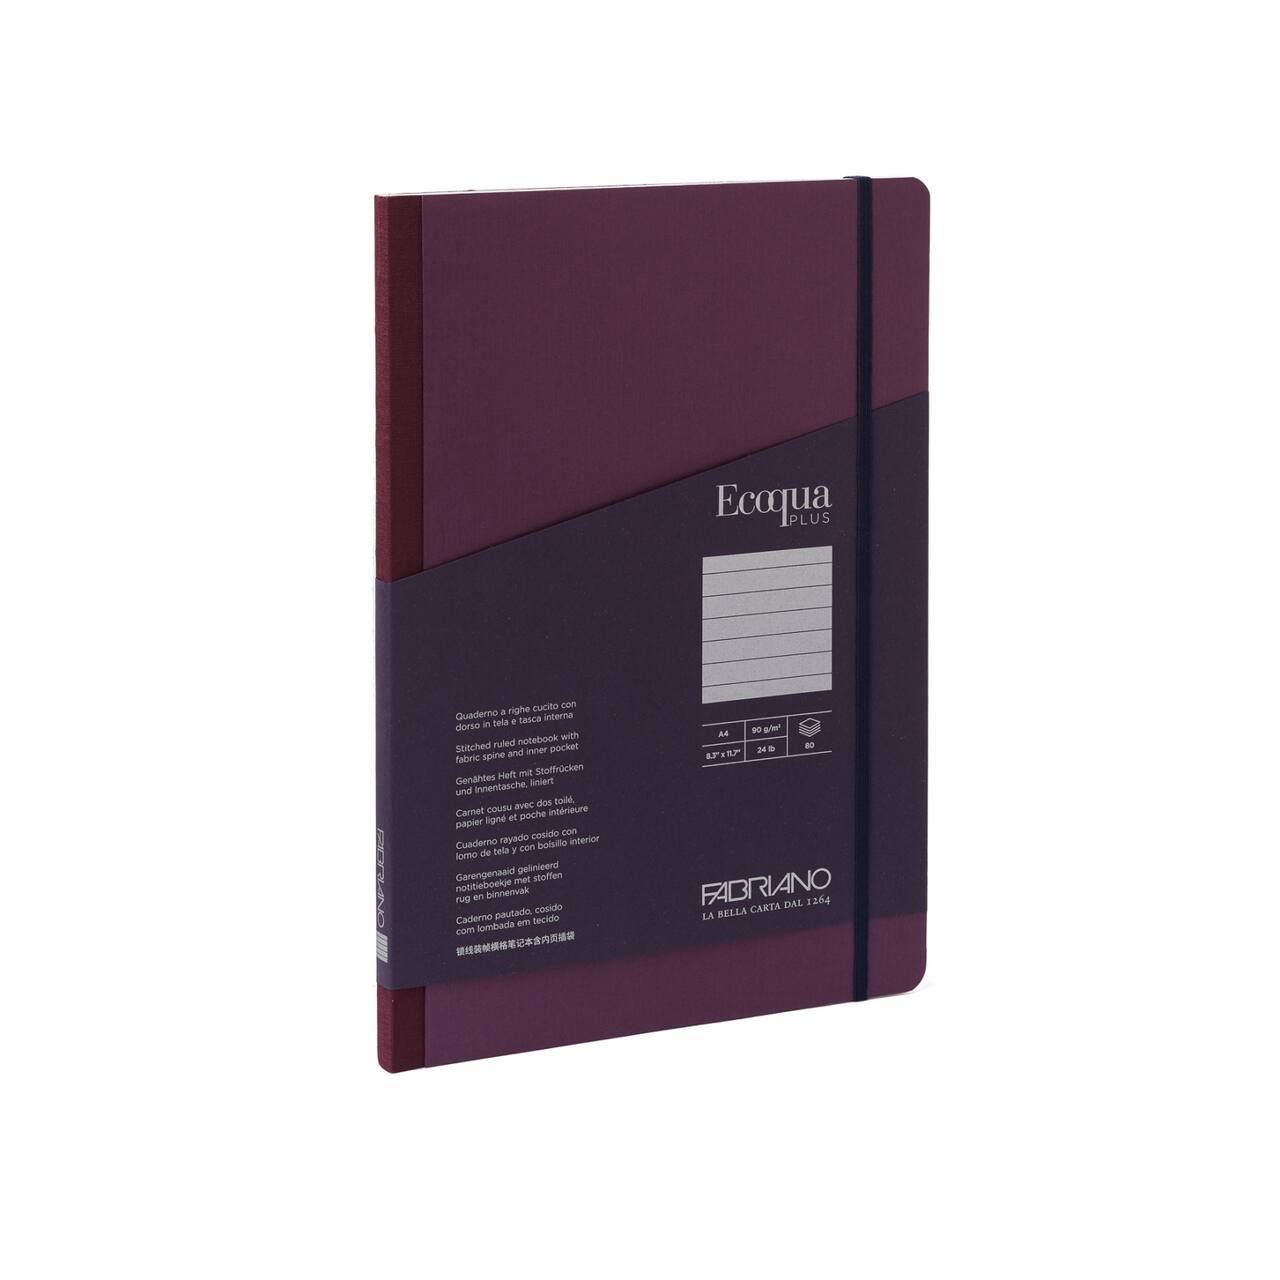 Fabriano&#xAE; Ecoqua Plus Lined A4 Fabric-Bound Notebook